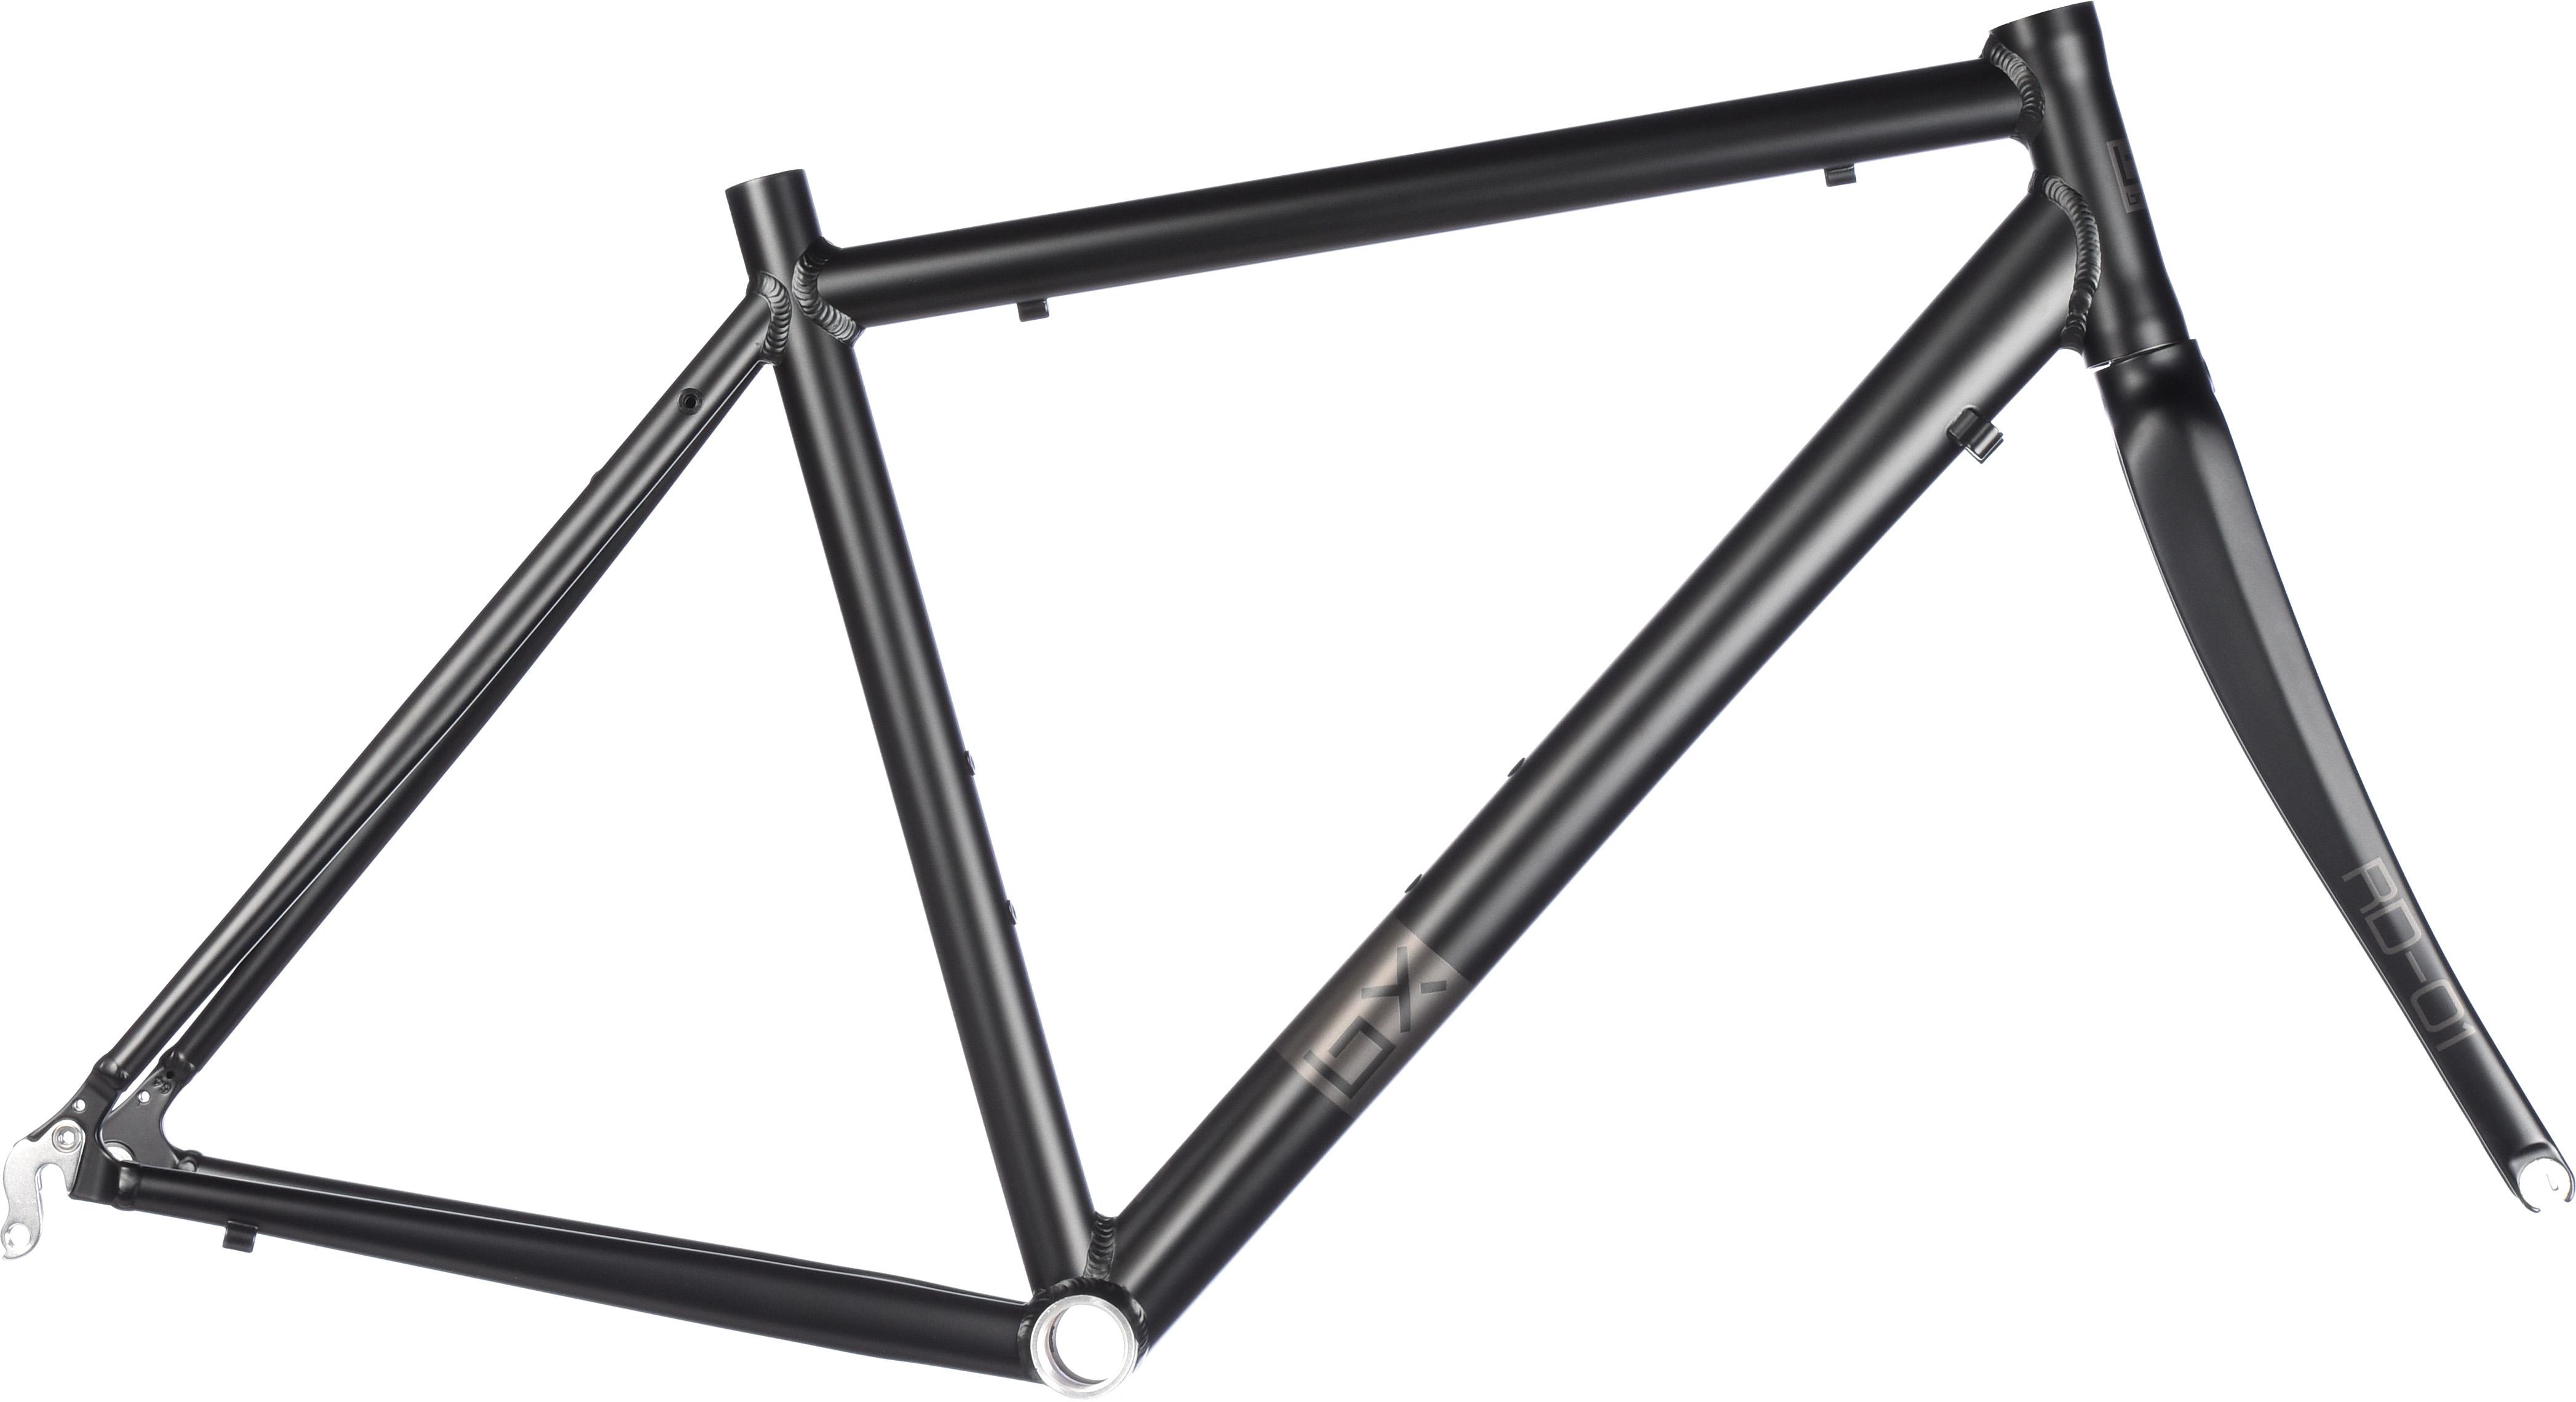 Brand-x Rd-01 Road Bike Frameset - Black